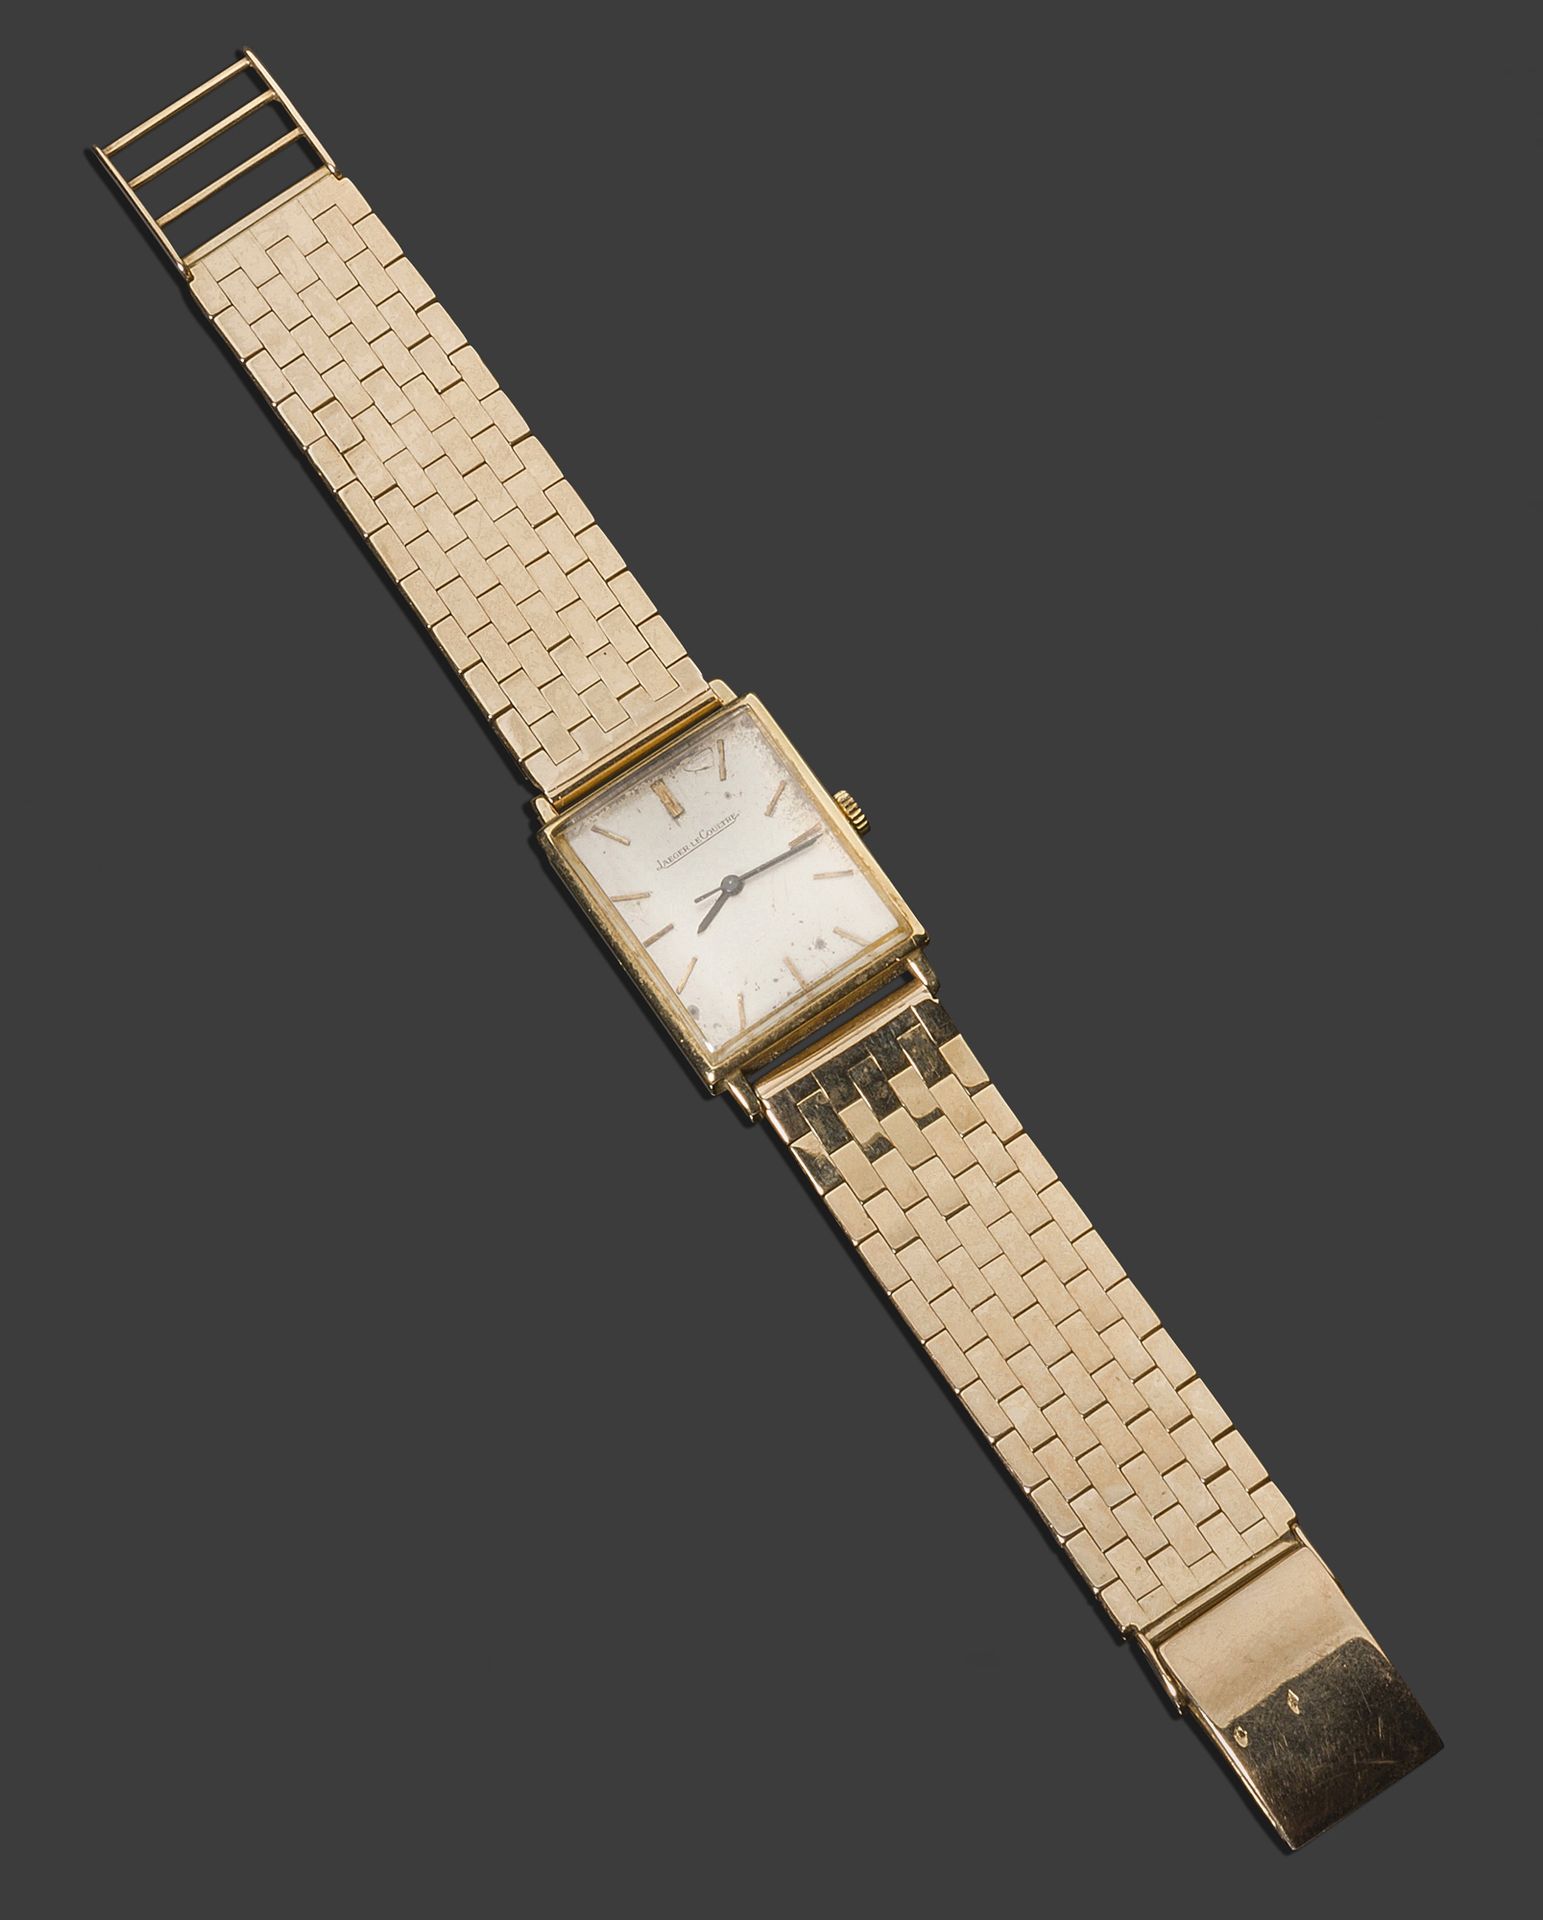 JAEGER Le COULTRE Reloj de hombre con brazalete flexible en oro de 18 quilates.
&hellip;